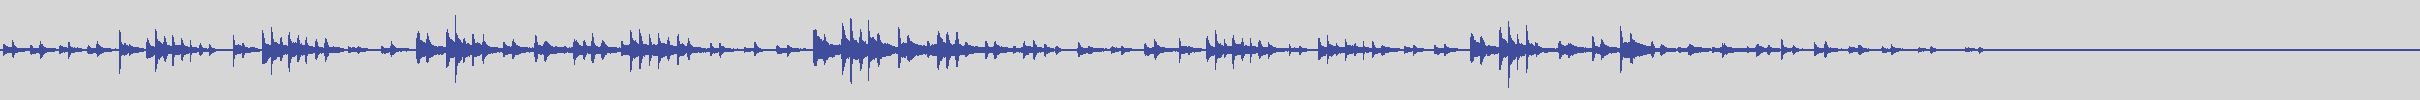 big_music_classic [BMC005] Erik Satie, Corrado Rossi - Gymnopedie N.2 [] audio wave form